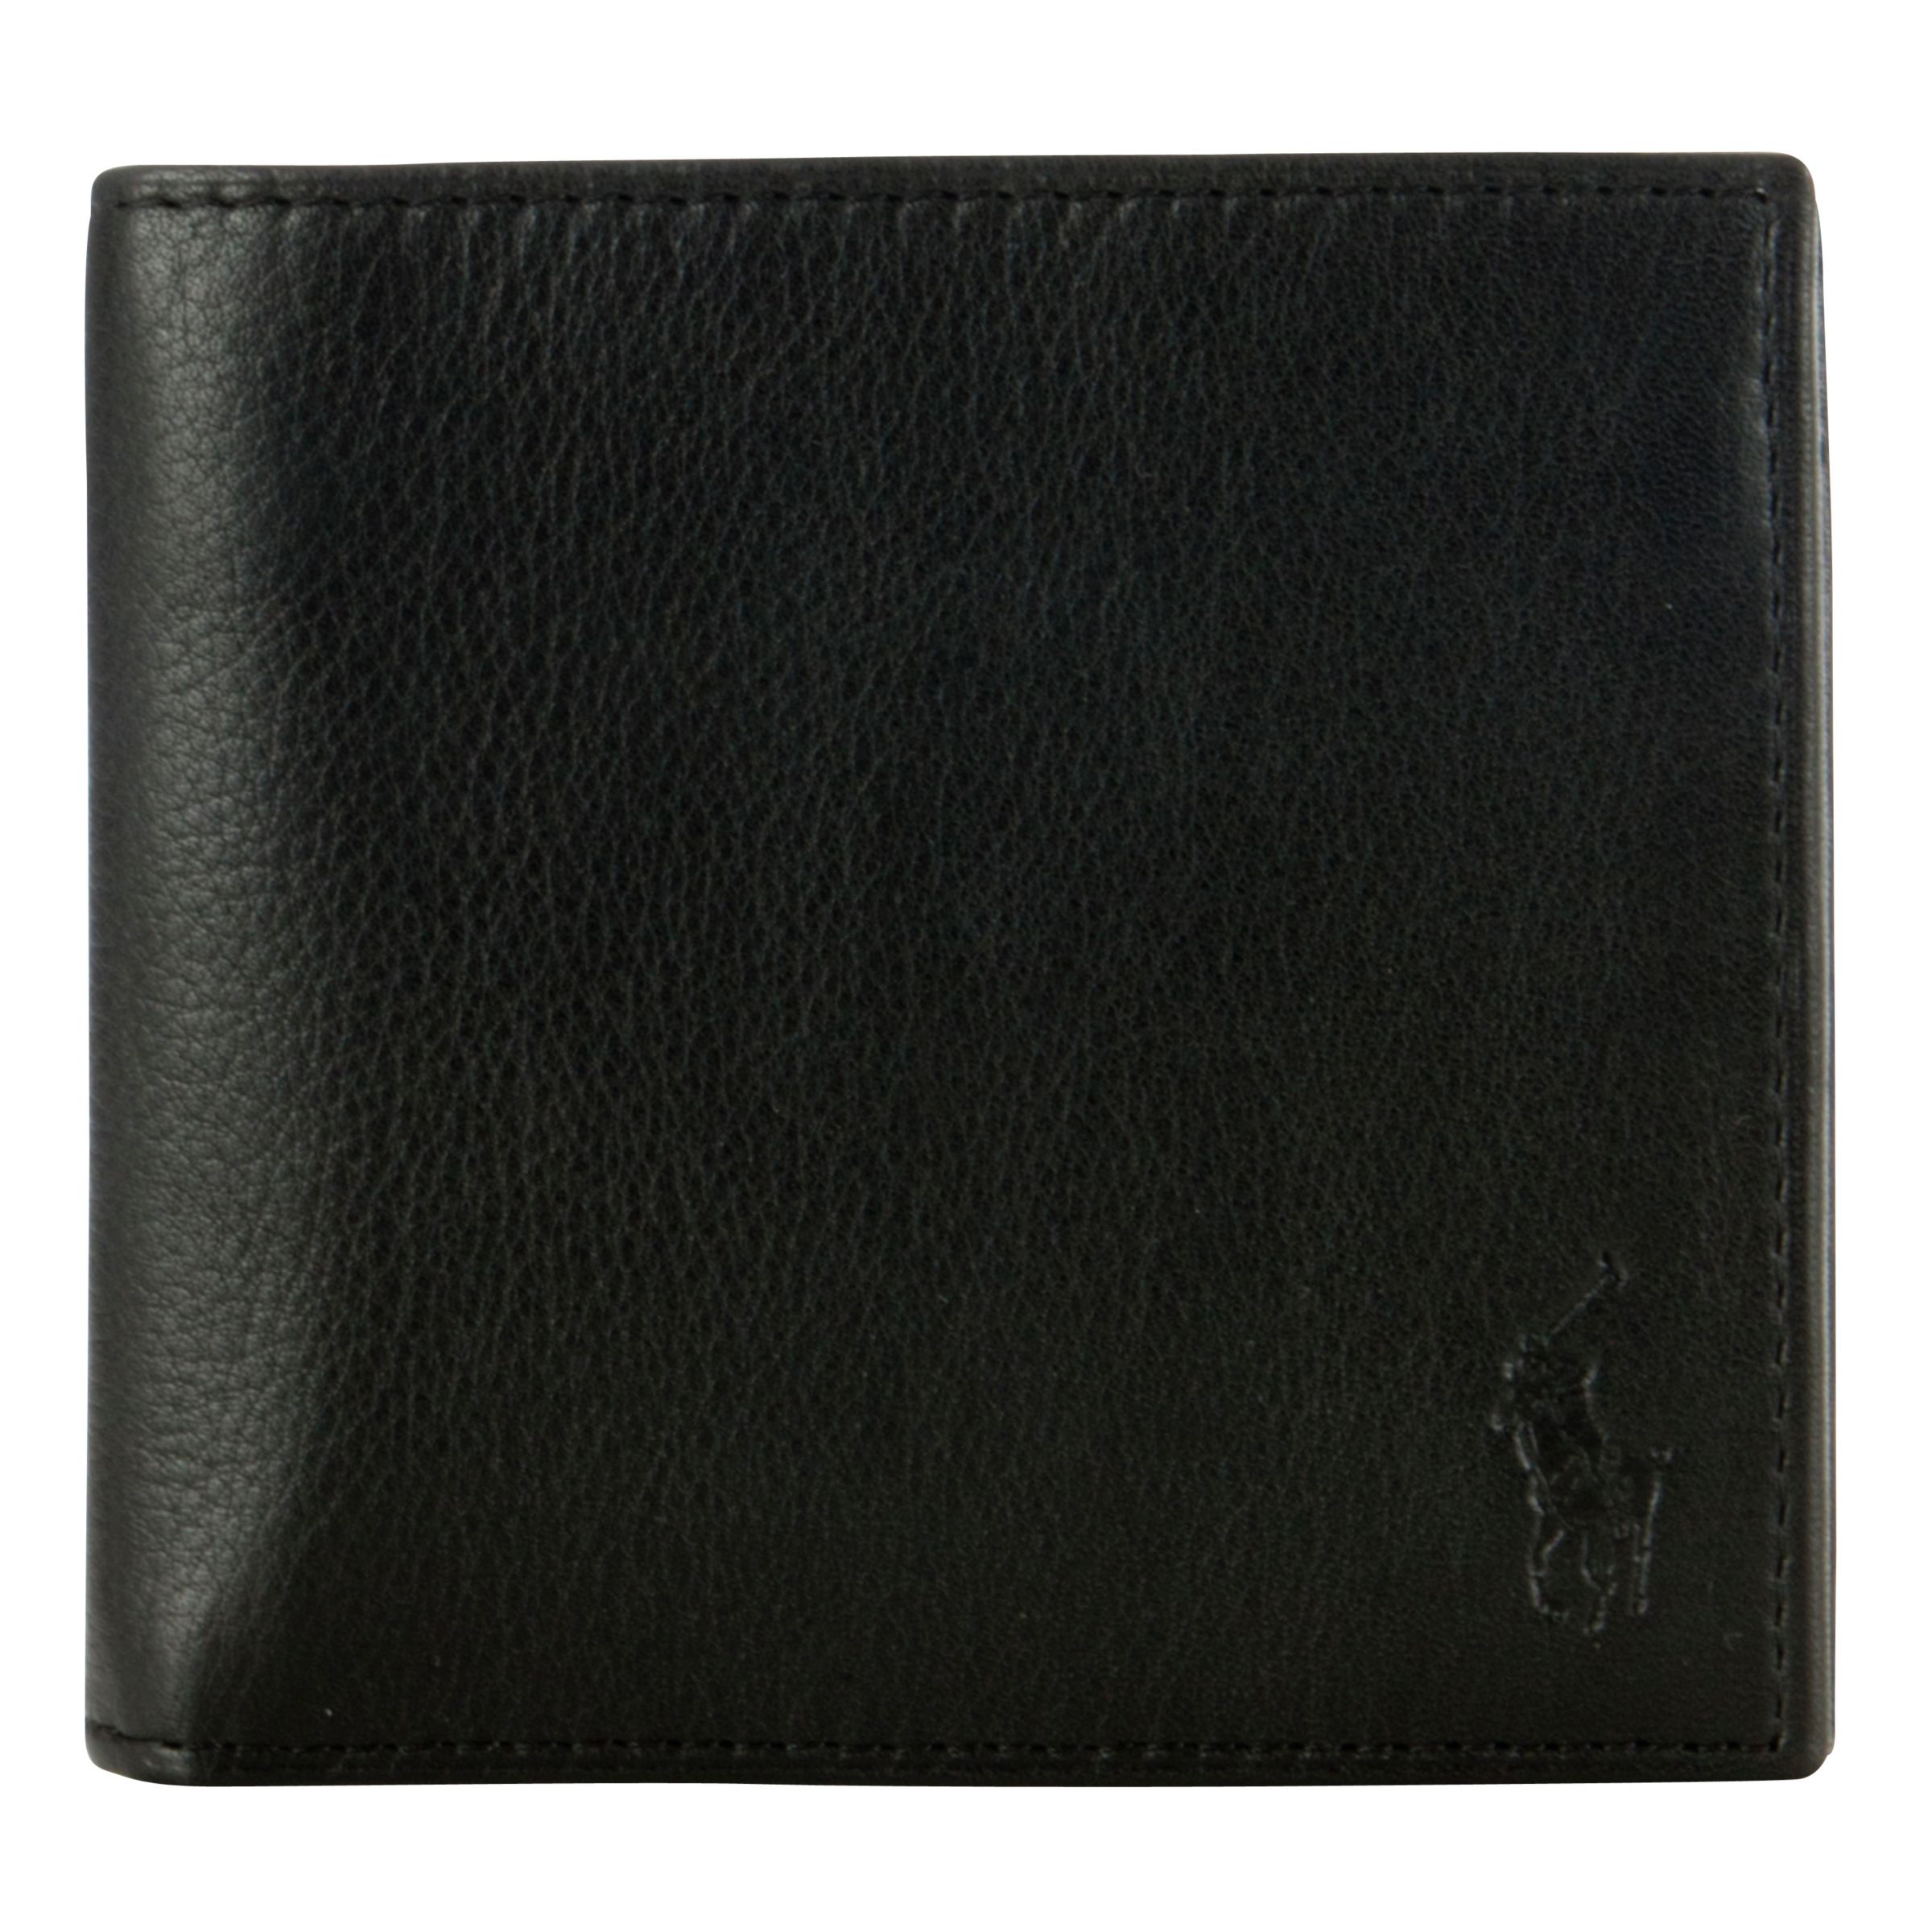 Polo Ralph Lauren Pebble Leather Wallet, Black at John Lewis & Partners